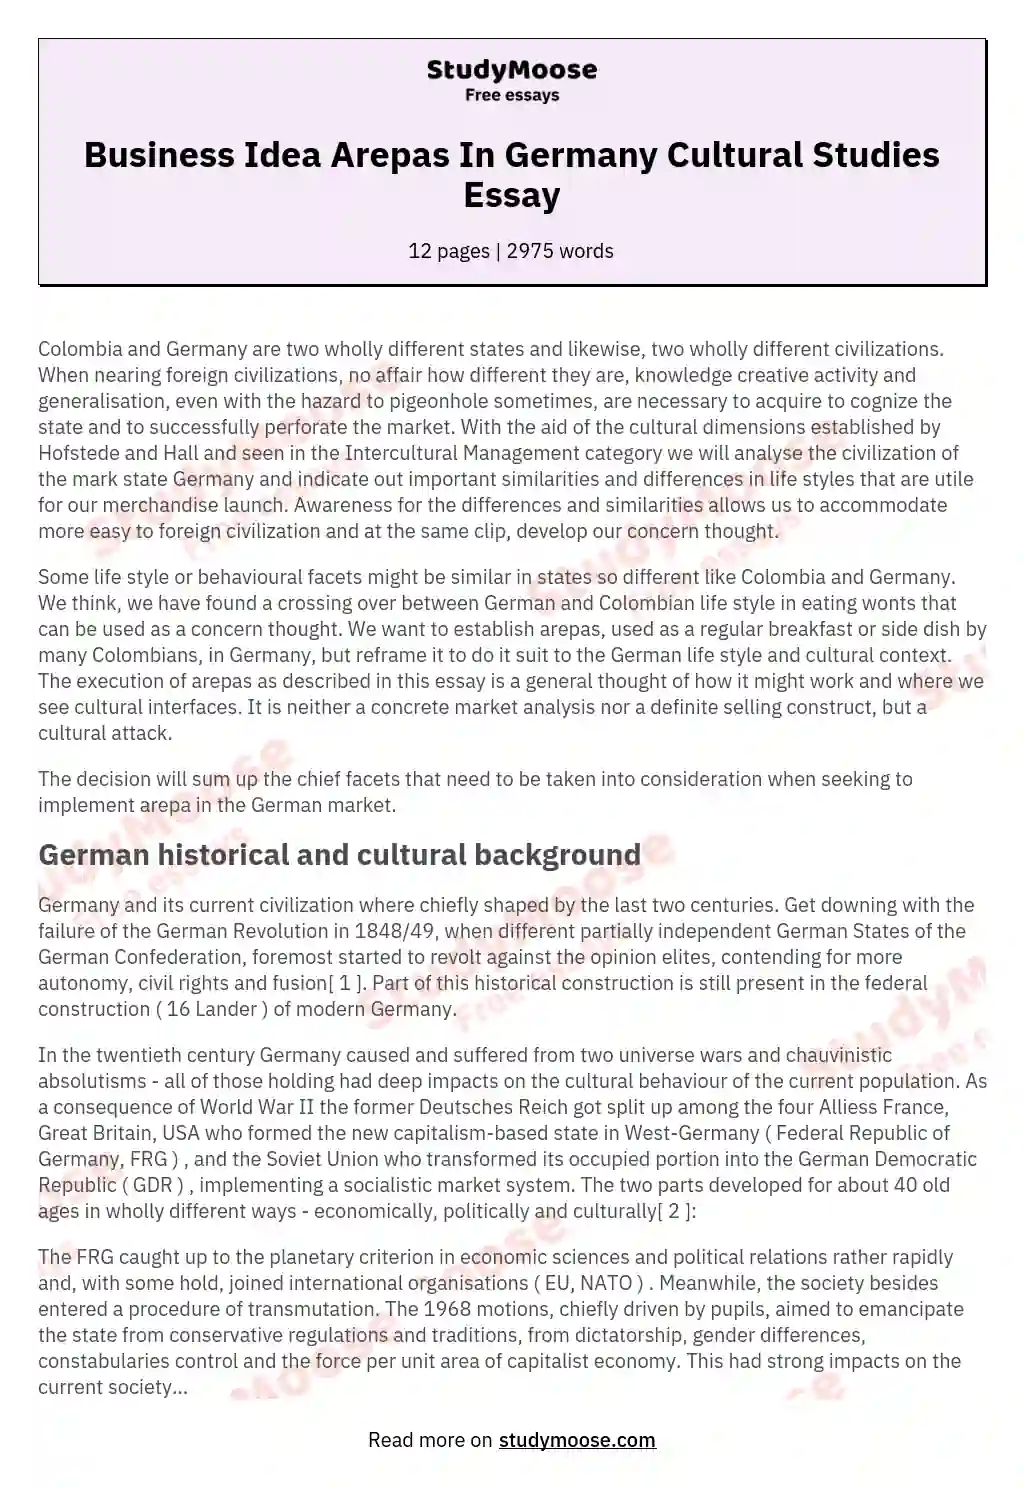 Business Idea Arepas In Germany Cultural Studies Essay essay